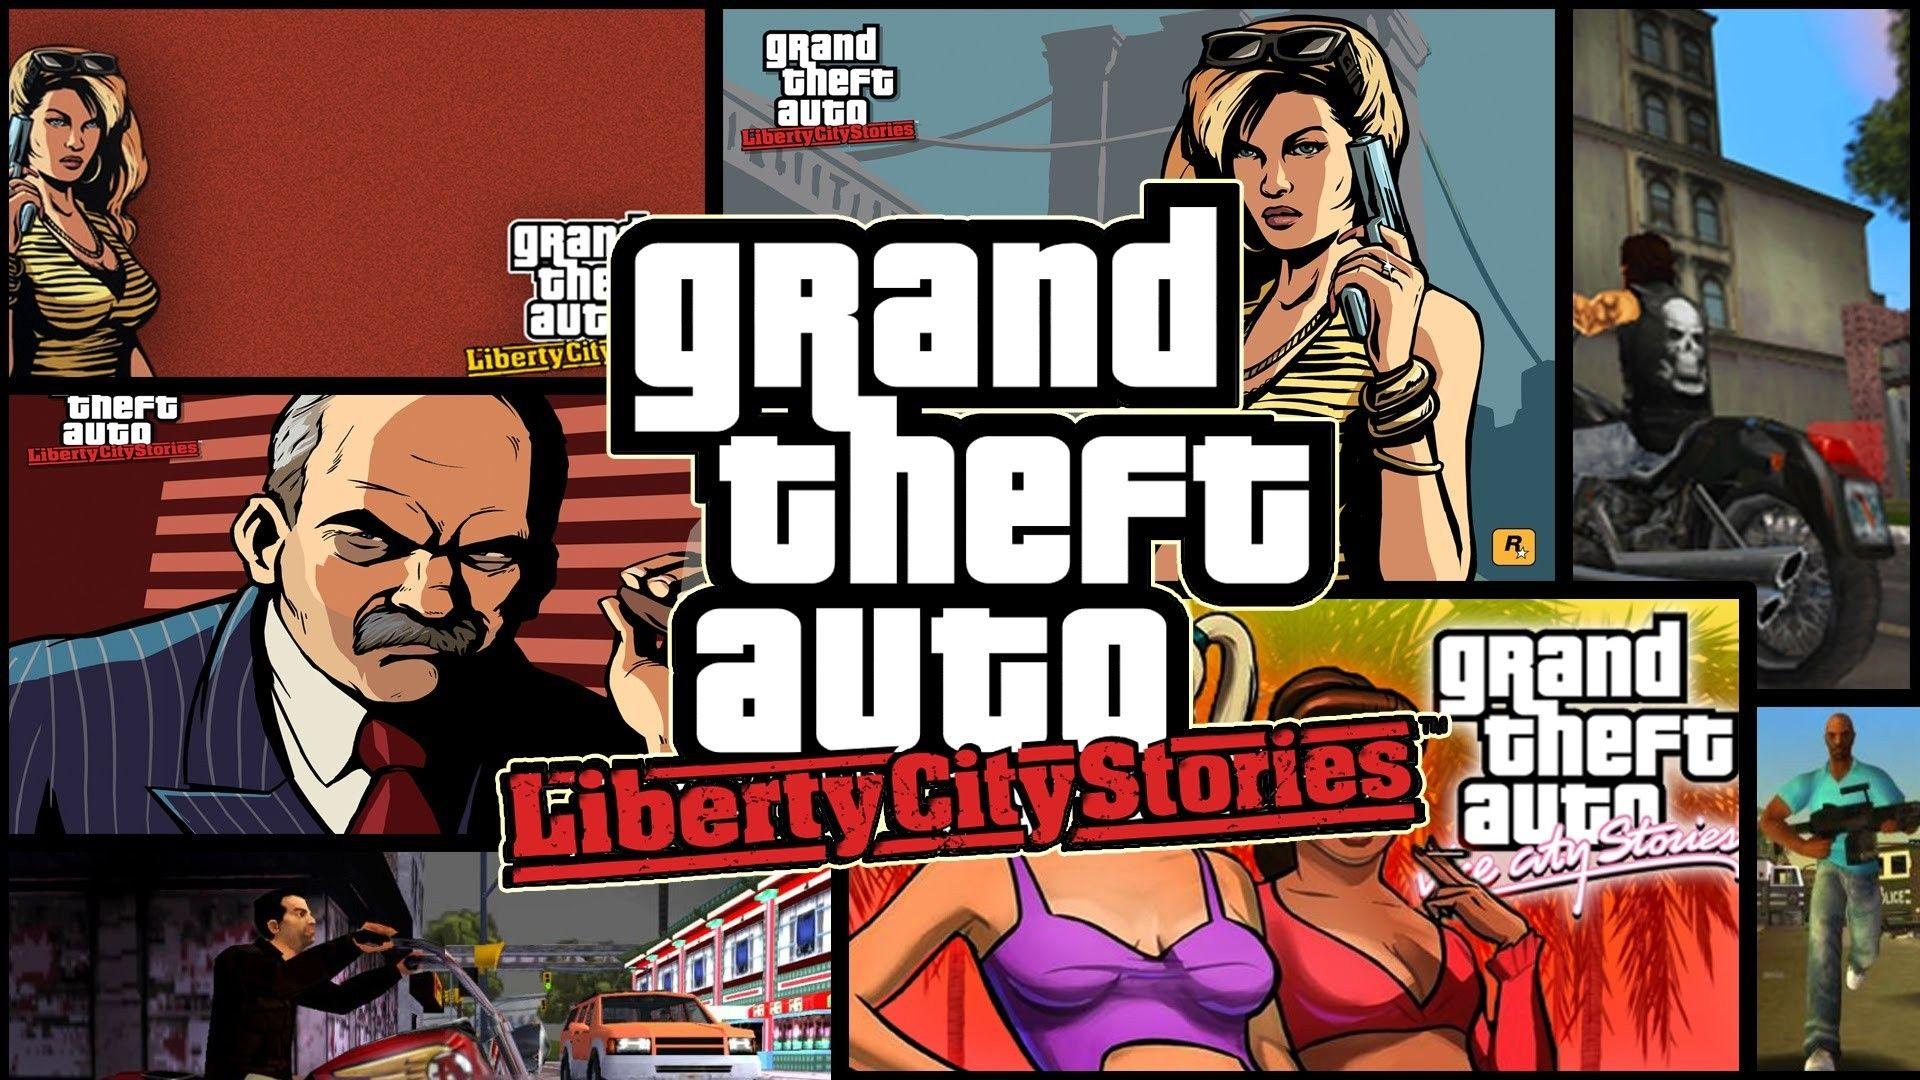 Grand Theft Auto - Liberty City Stories (USA) Sony PlayStation 2